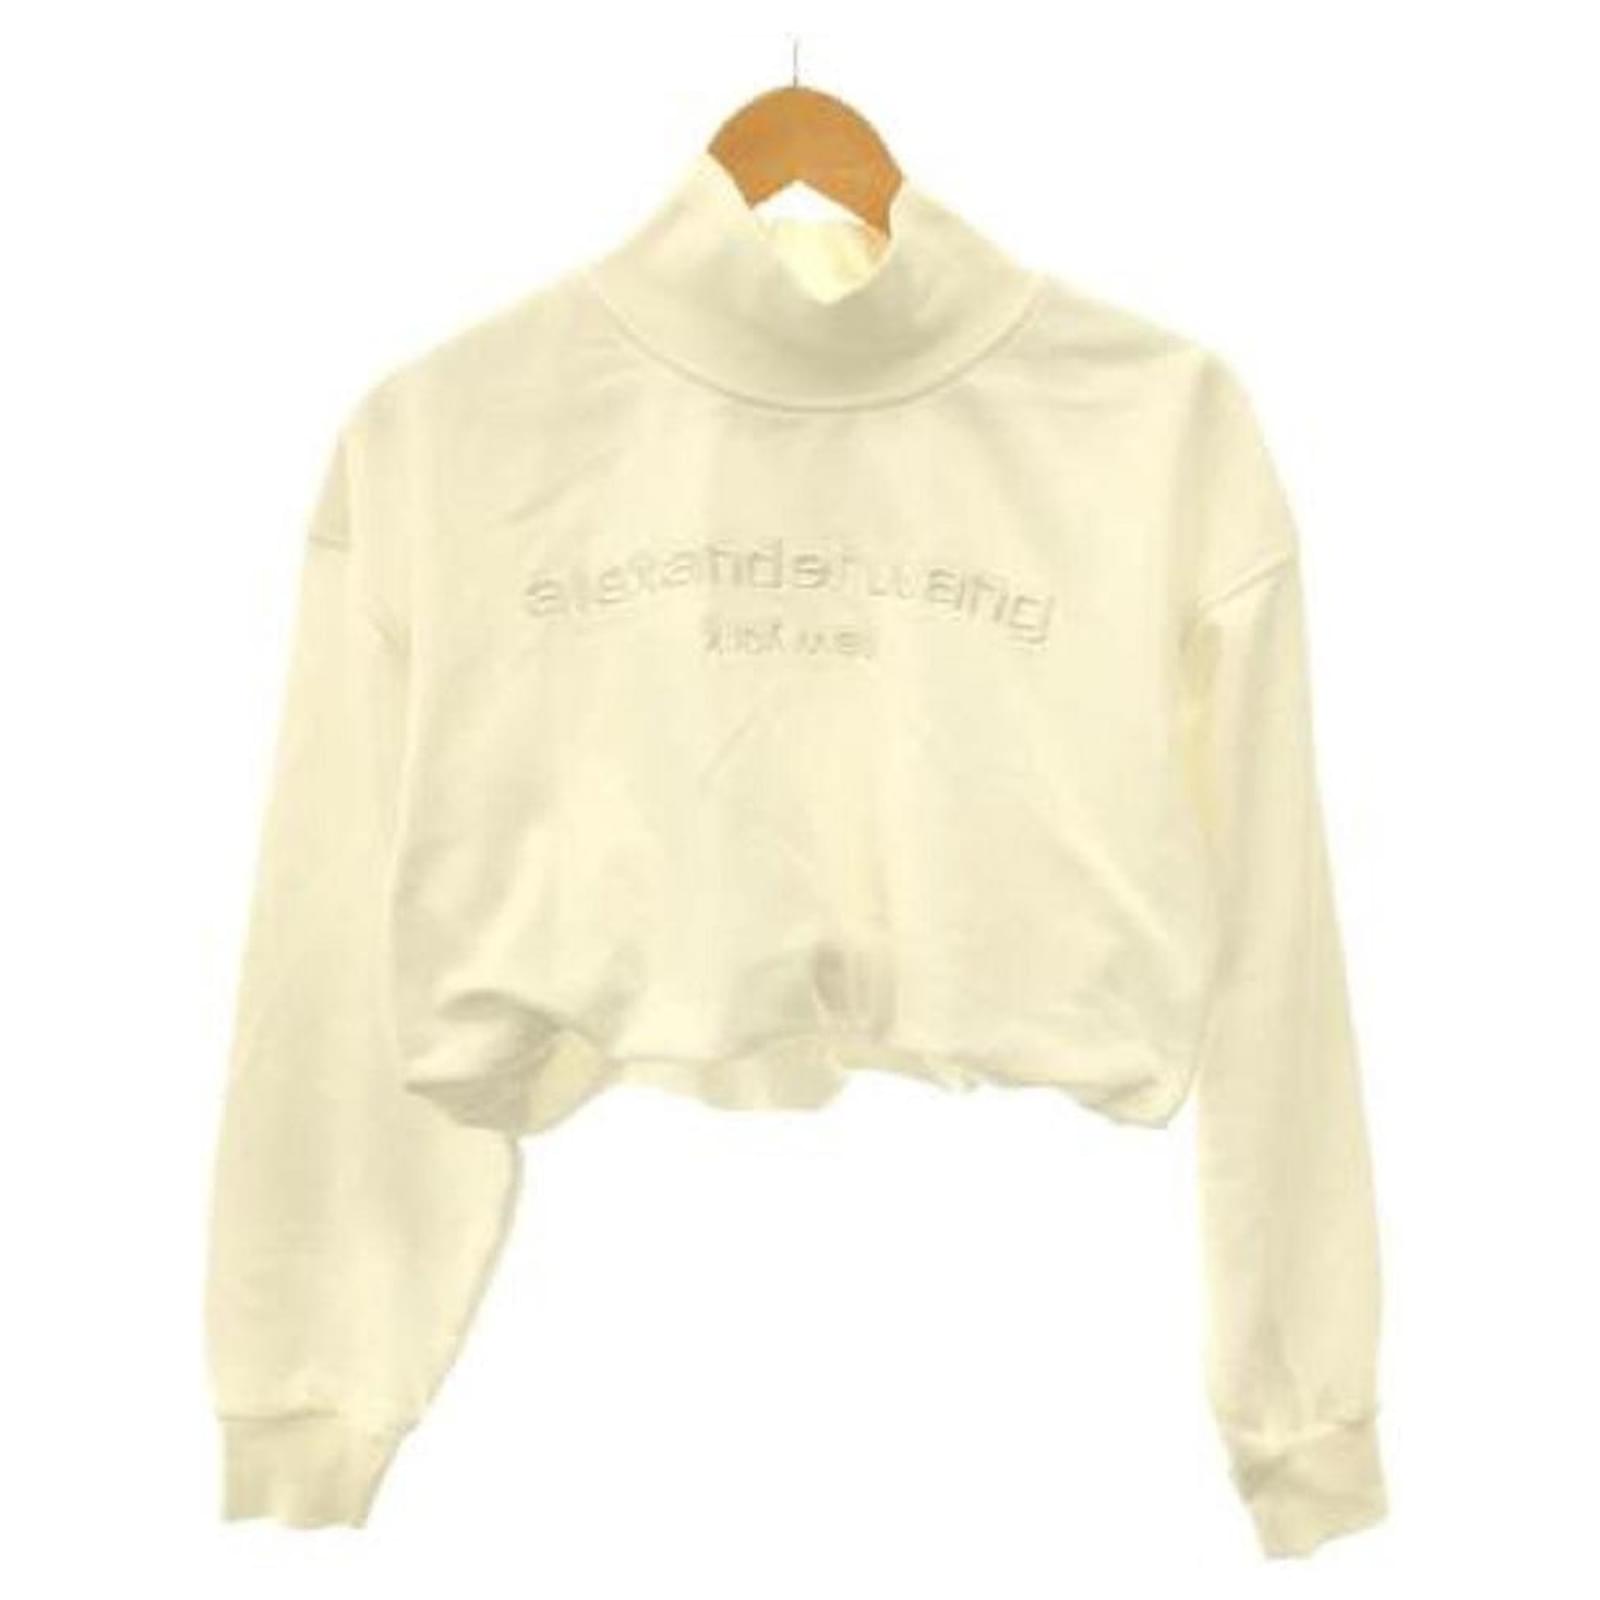 [Used] Alexander Wang Cropped Mock Neck Sweatshirt with Embroidery /  Sweatshirt / S / White